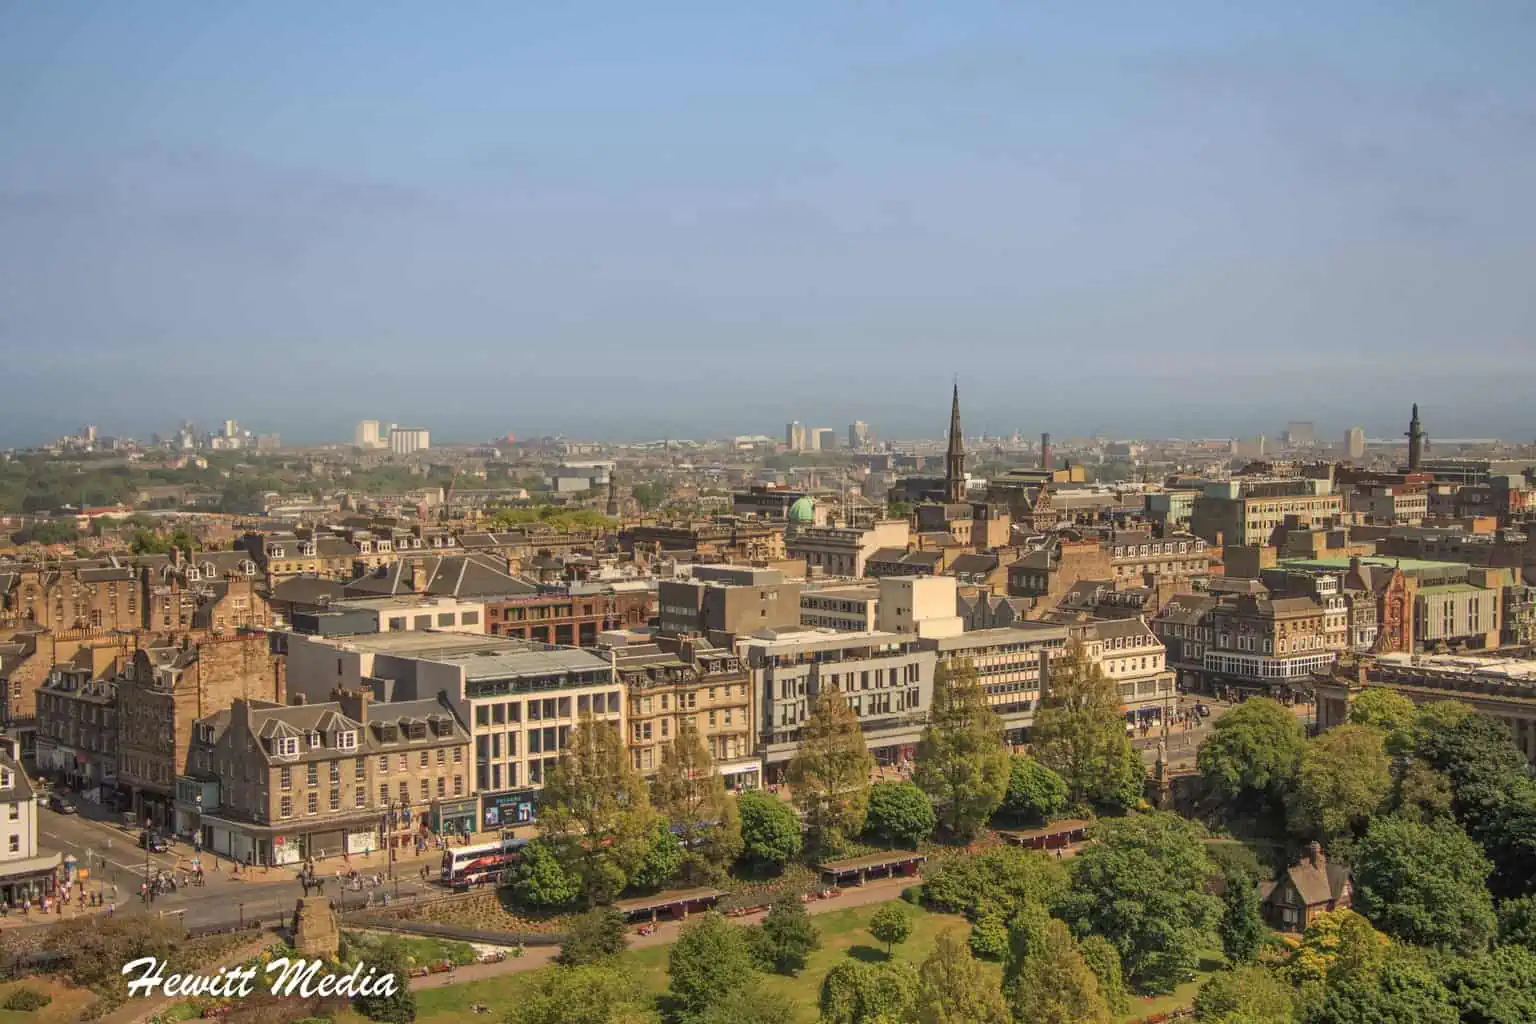 Europe's Top Destinations - Edinburgh